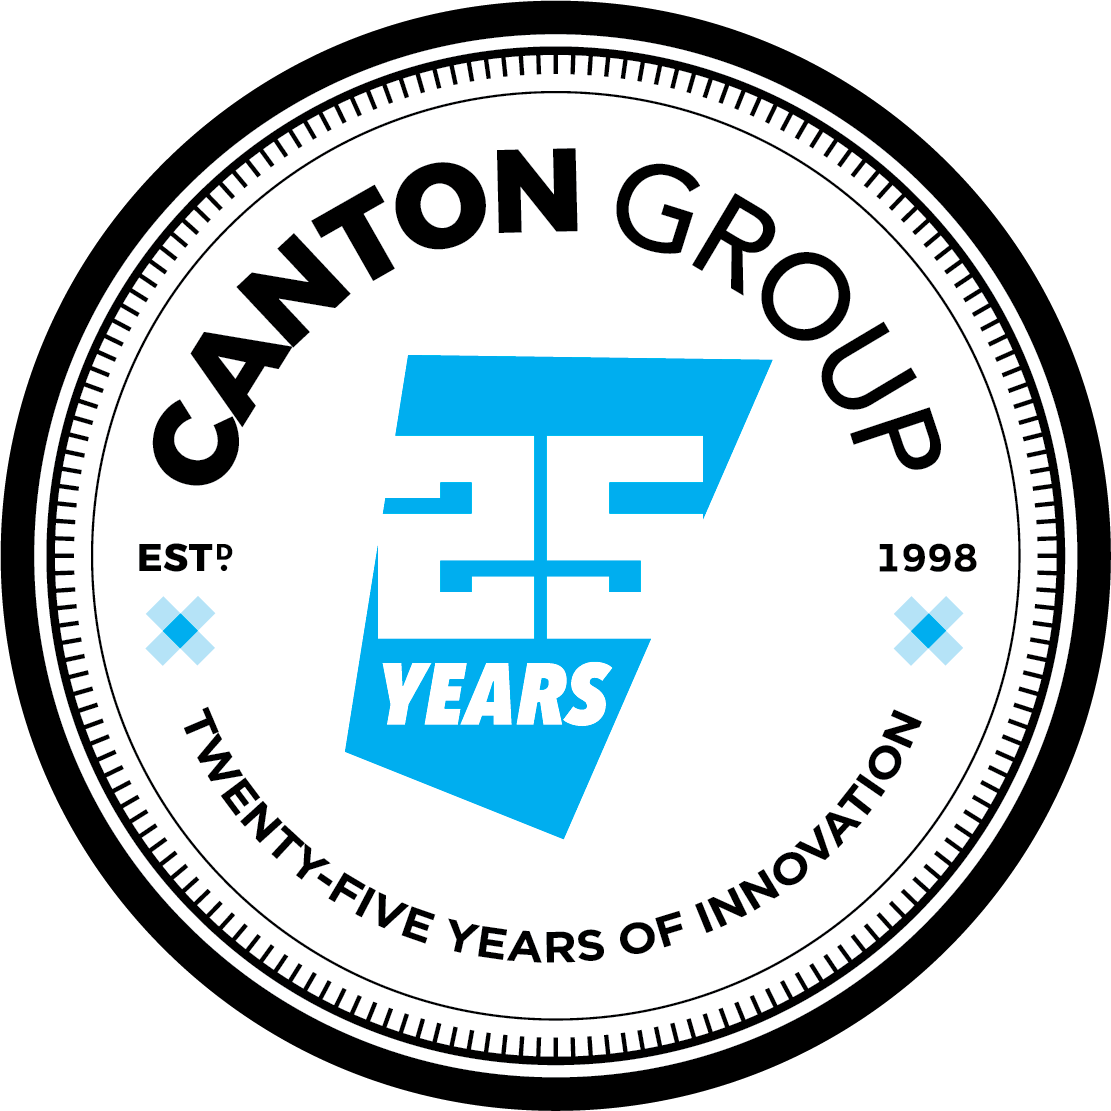 The Canton Group 25th Anniversary commemorative badge graphic